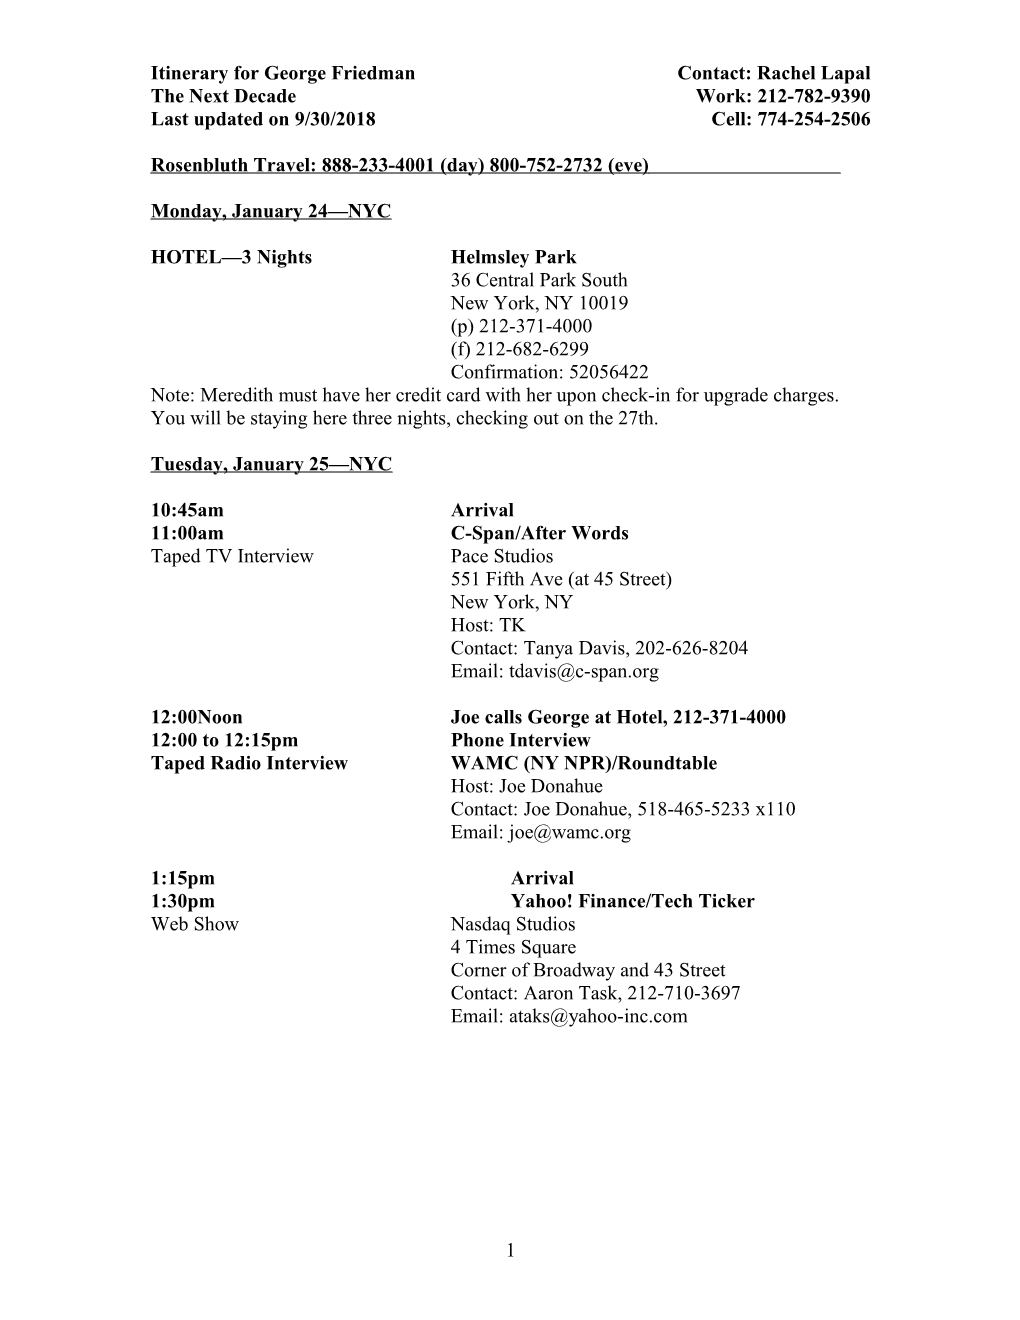 Itinerary for George Friedmancontact: Rachel Lapal